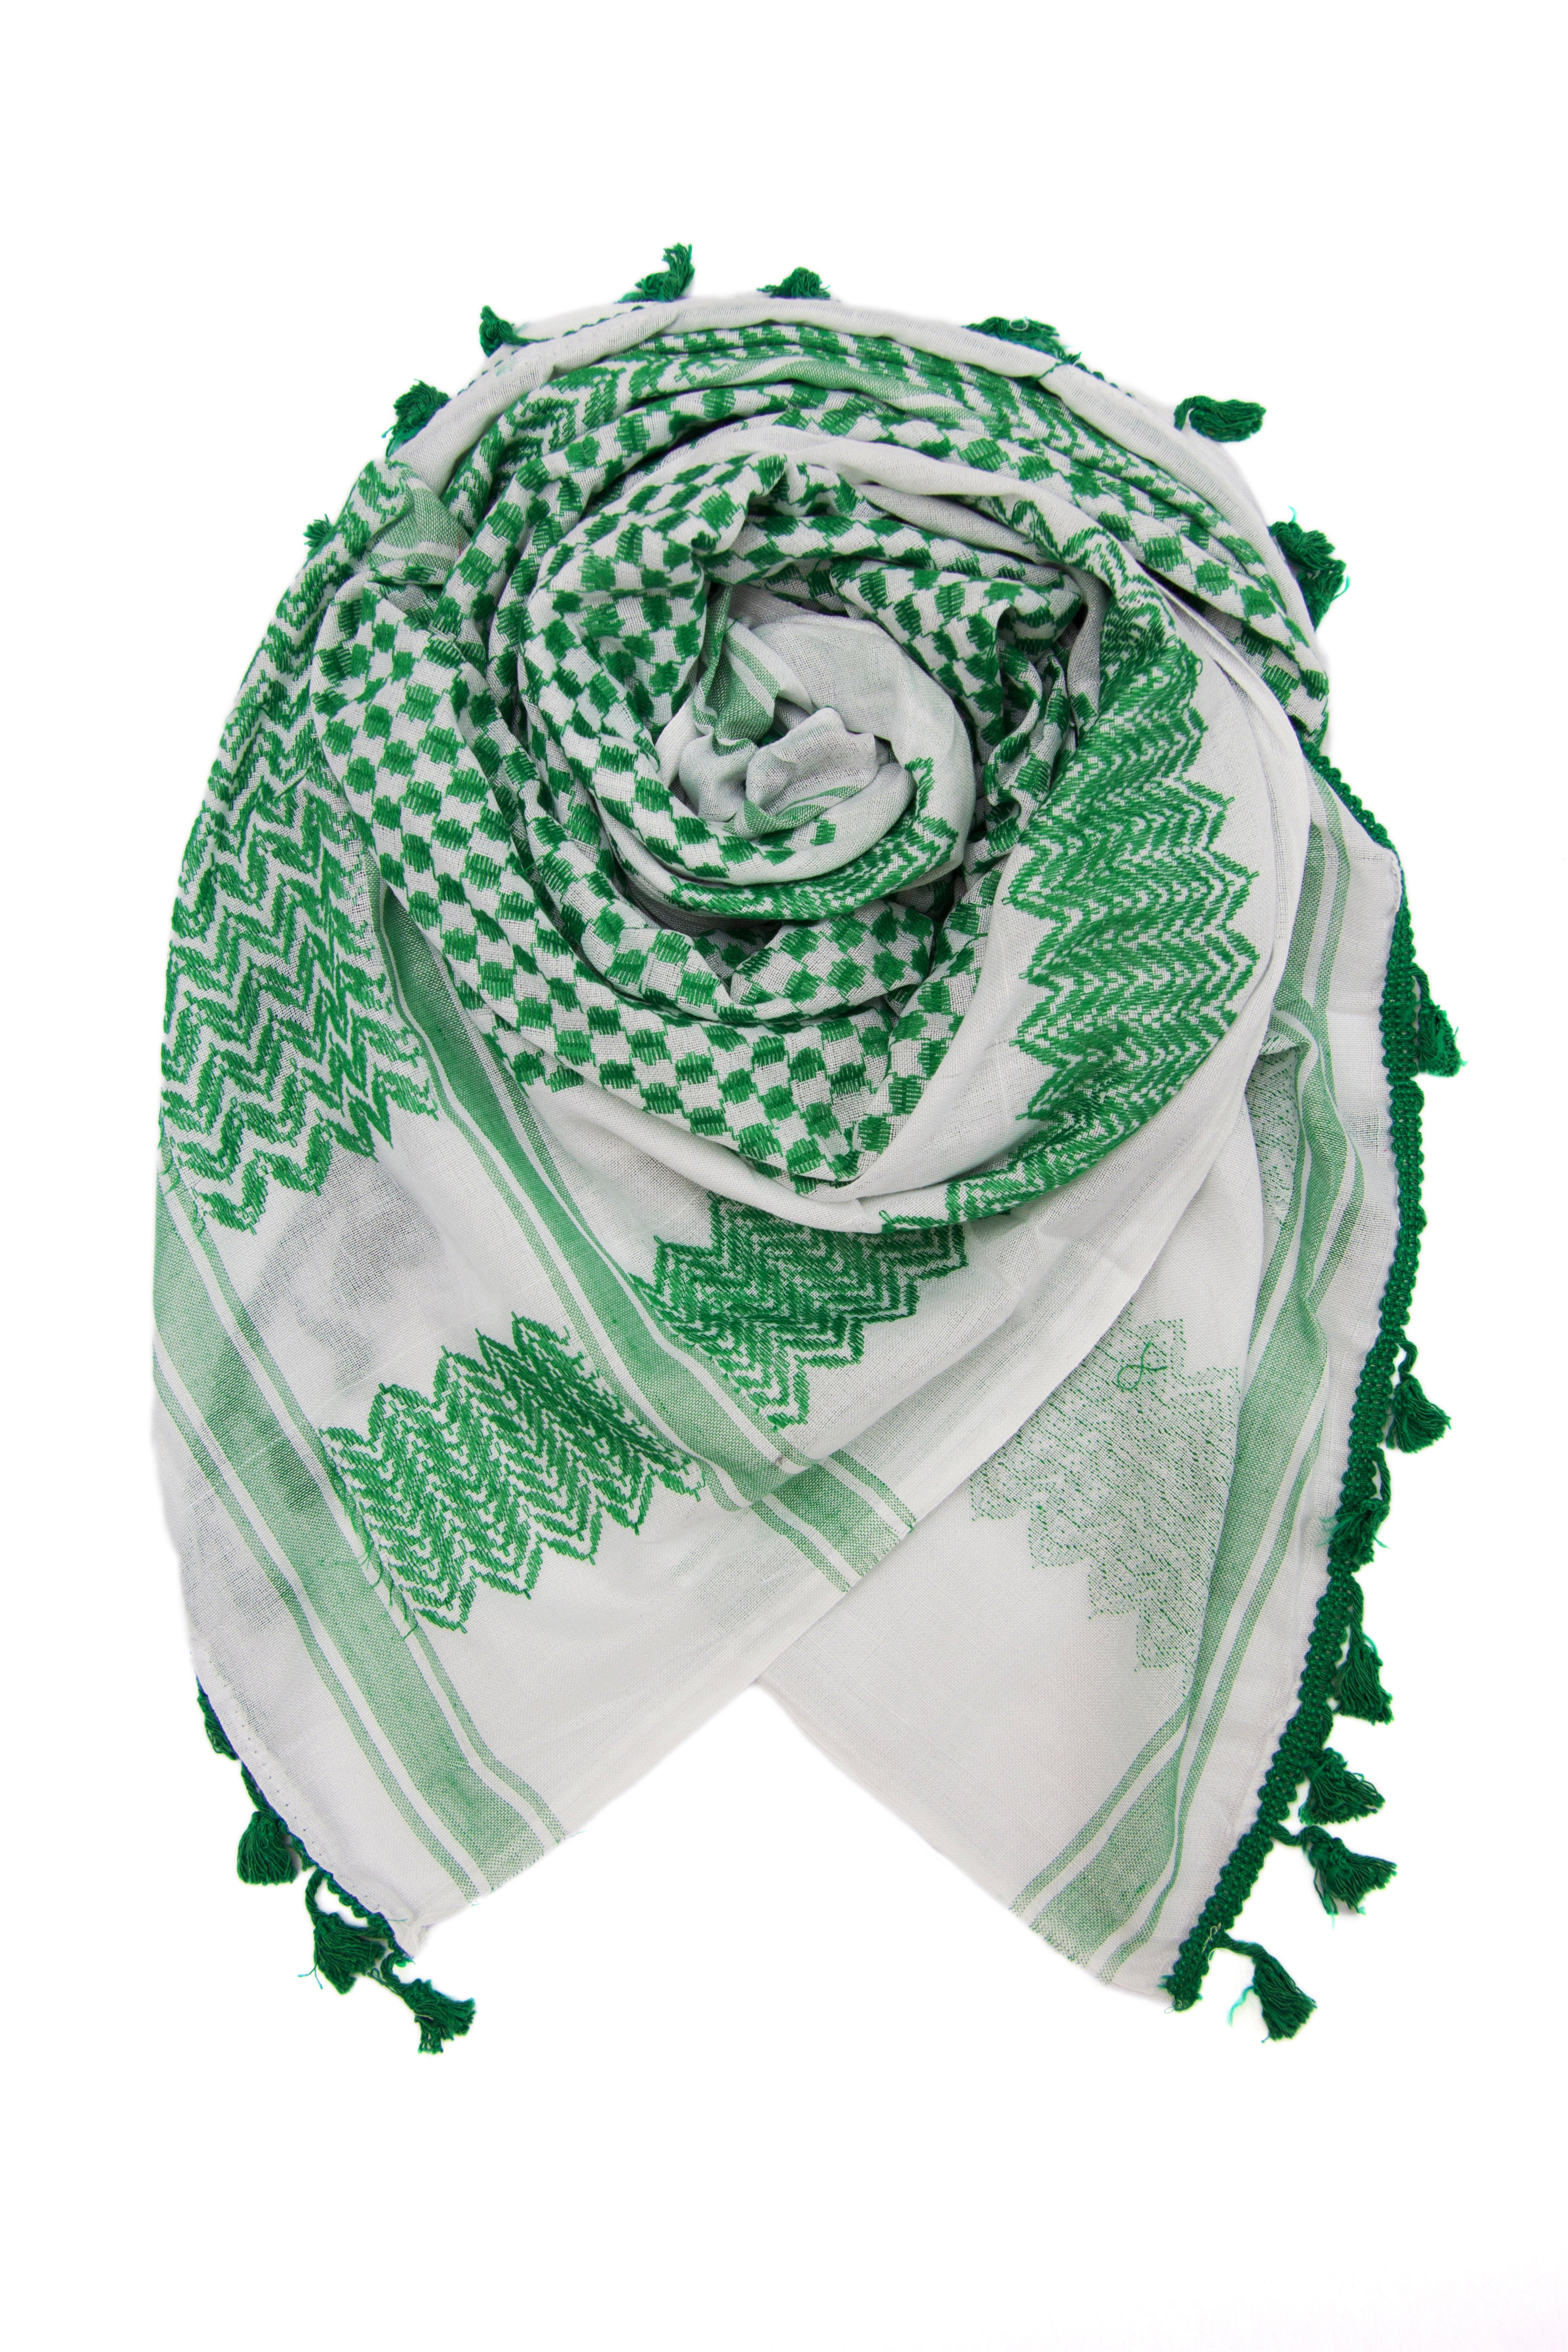 Green and White - HirbawiUSA